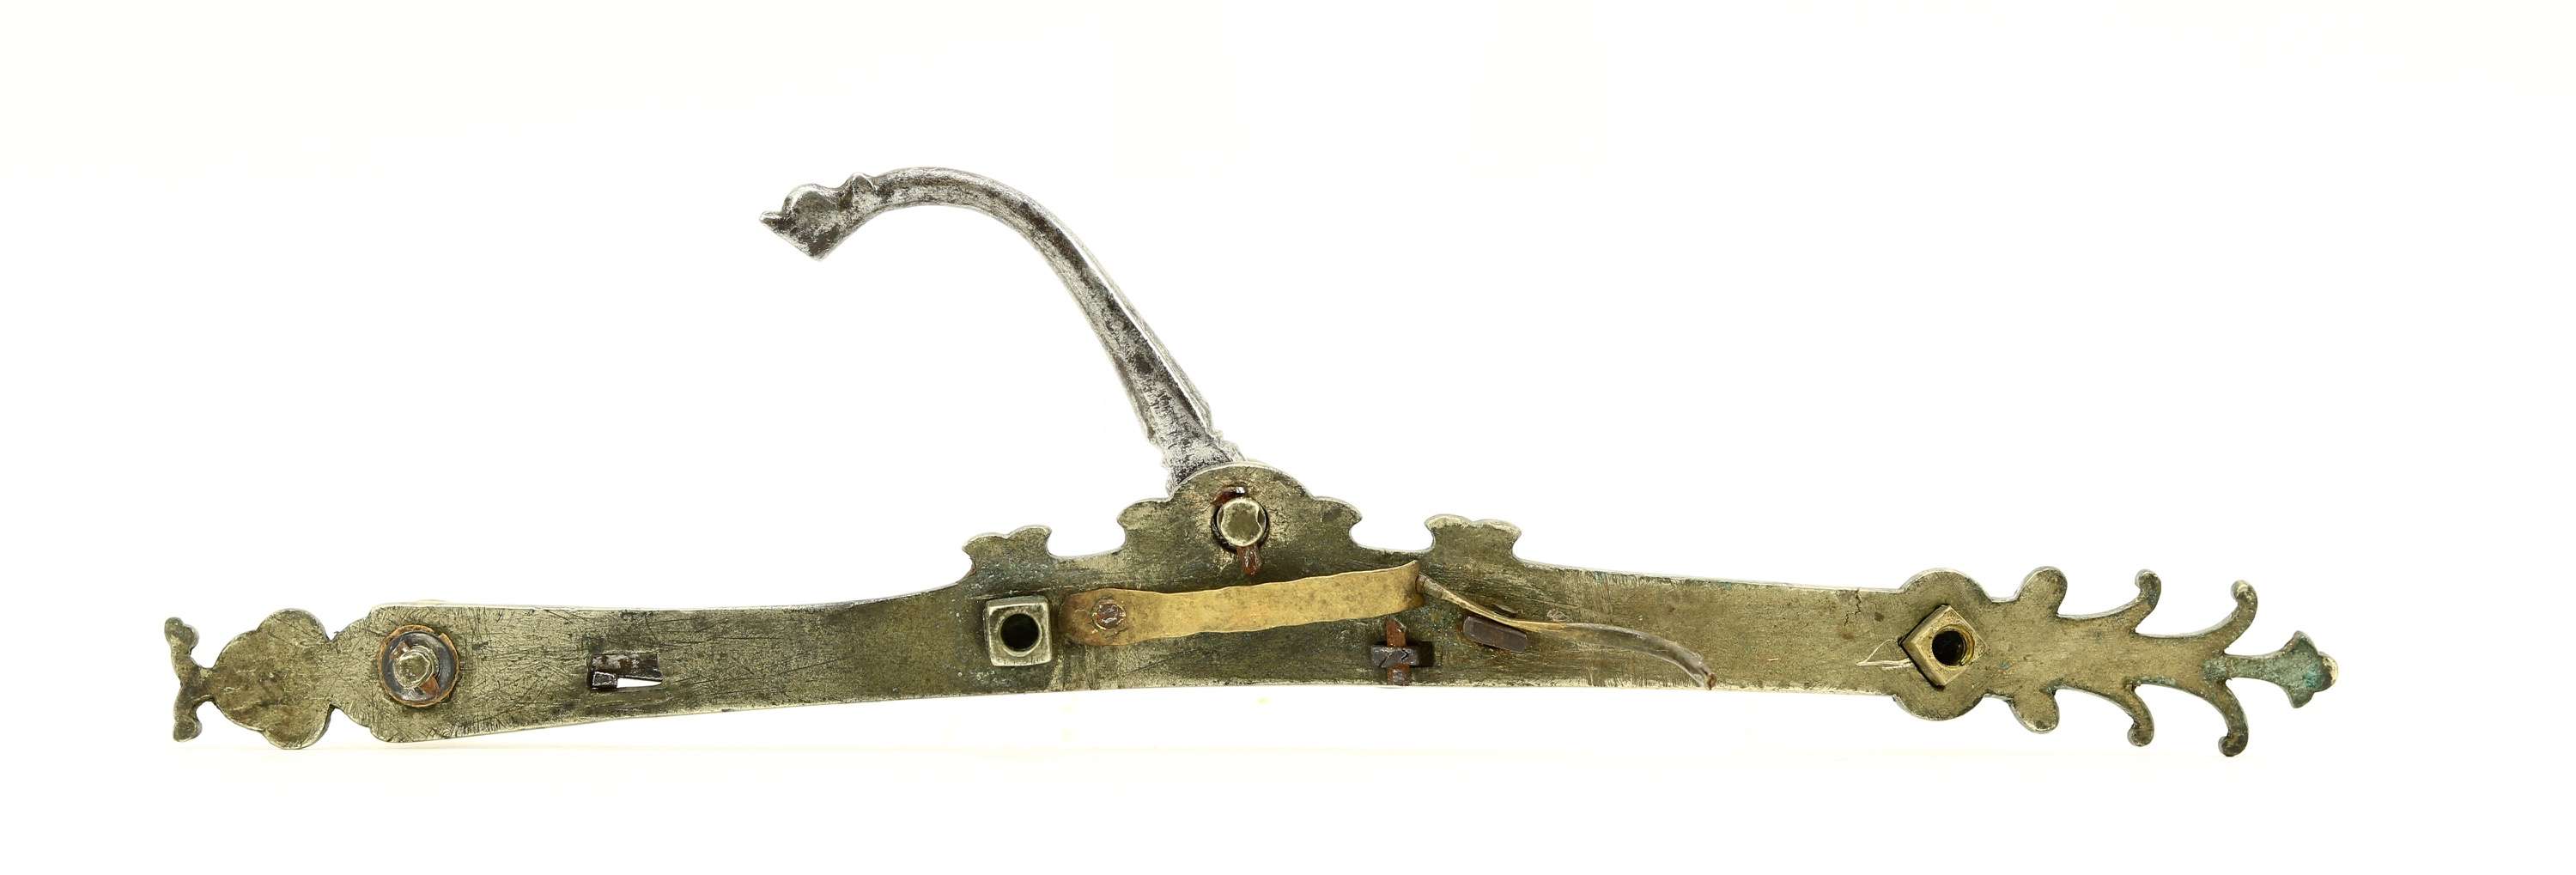 Vietnamese matchlock musket with baitong lock